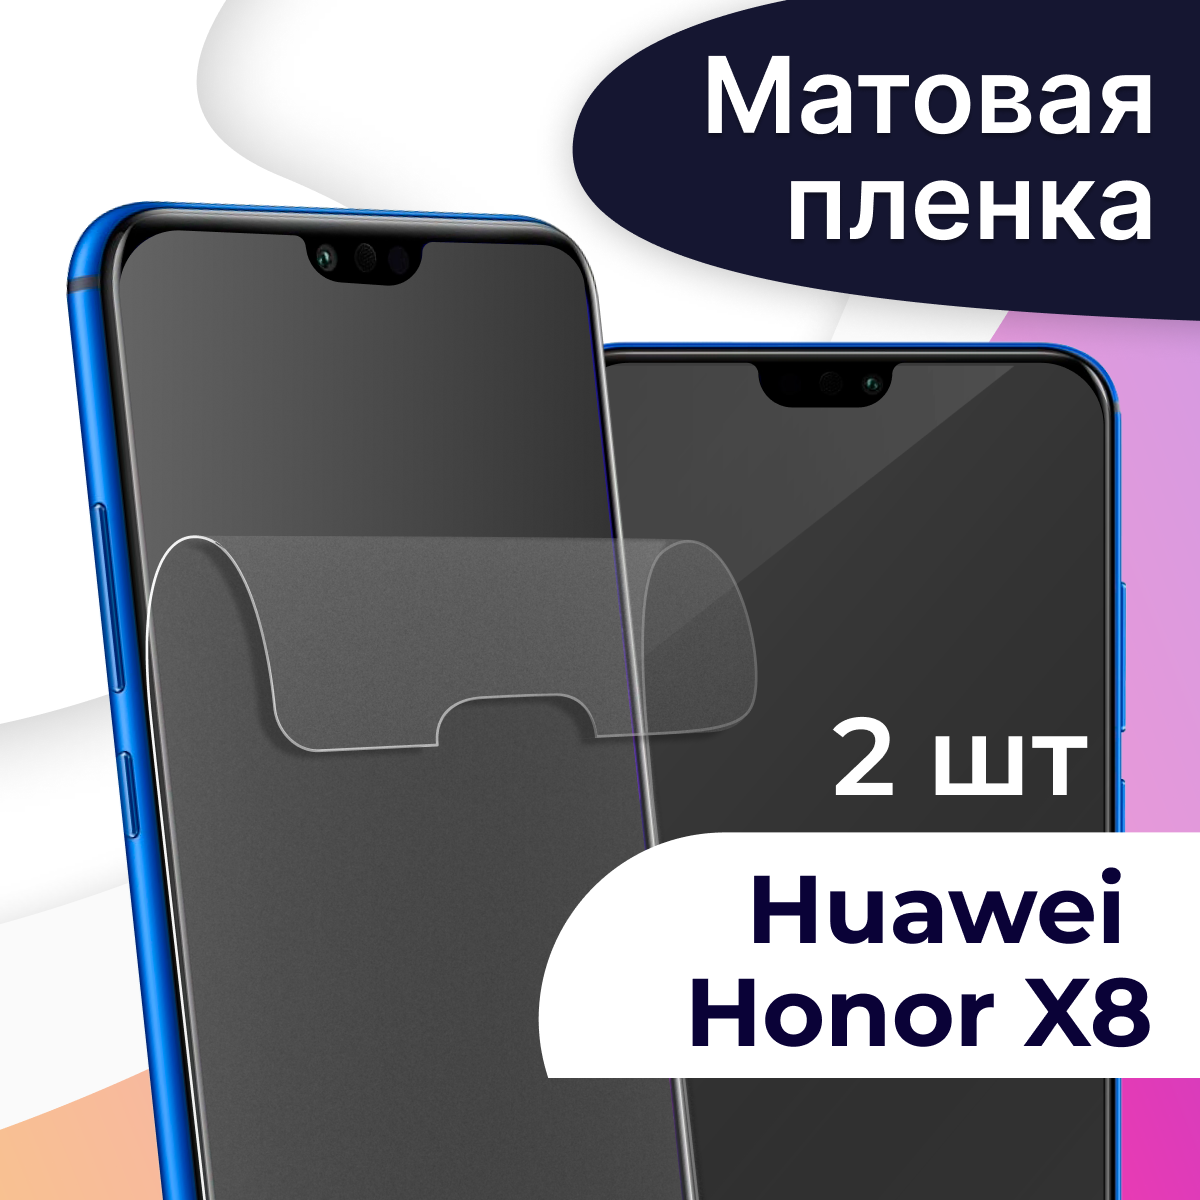 Комплект 2 шт. Матовая пленка на телефон Huawei Honor X8 / Гидрогелевая противоударная пленка для смартфона Хуавей Хонор Х8 / Защитная пленка